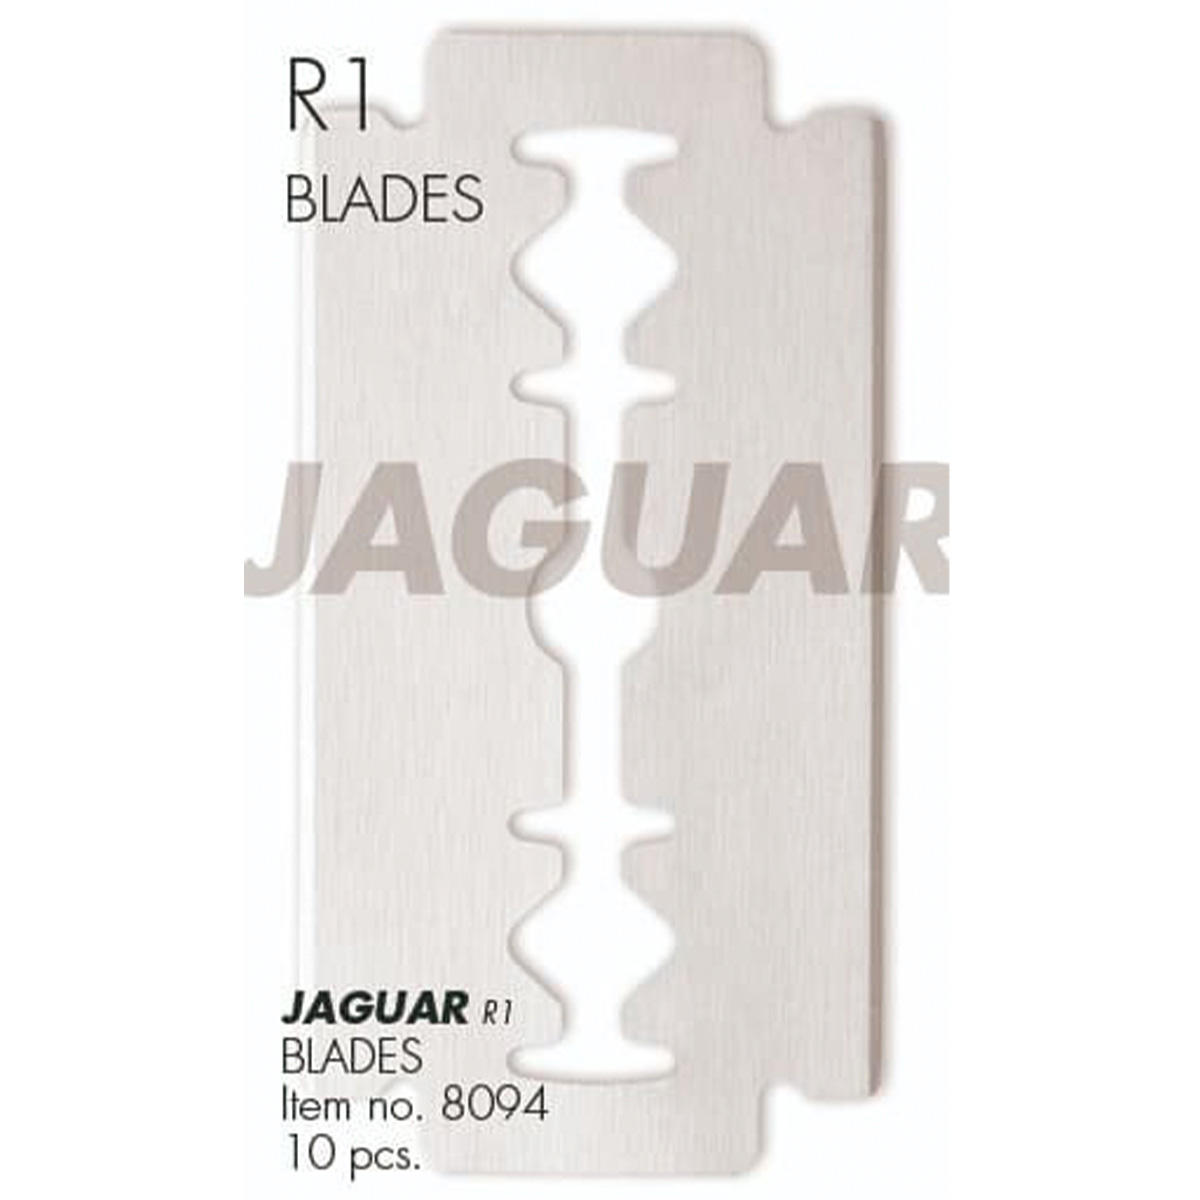 Jaguar R1 Blades Basic Pro Packung 10 Stück - 2